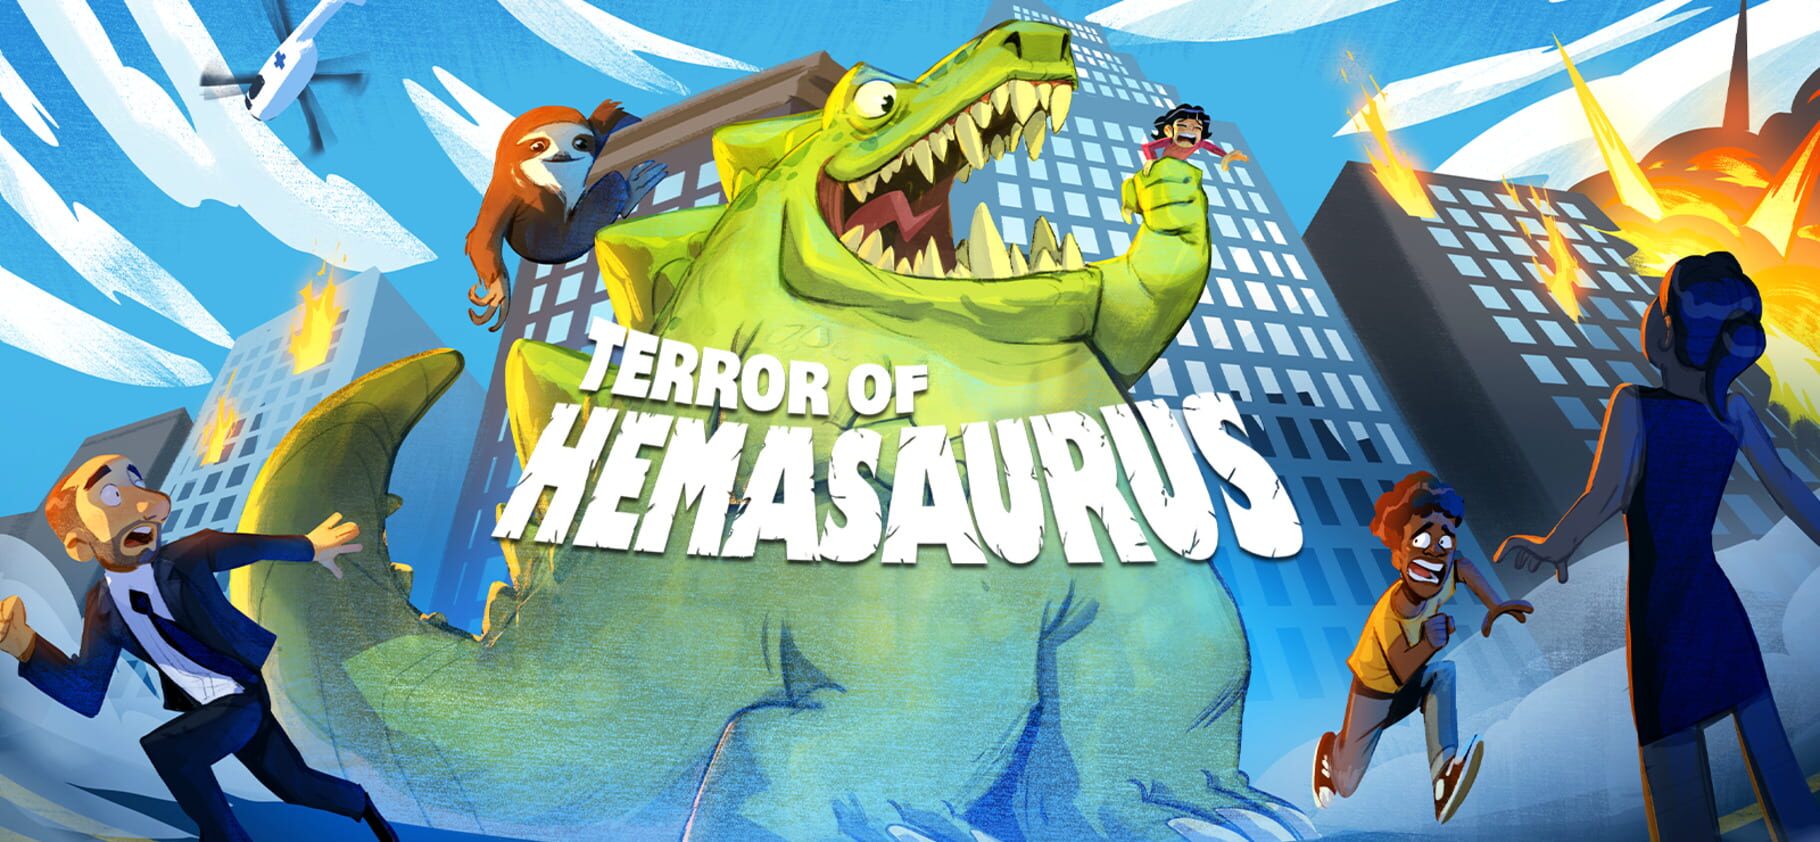 Terror of Hemasaurus artwork